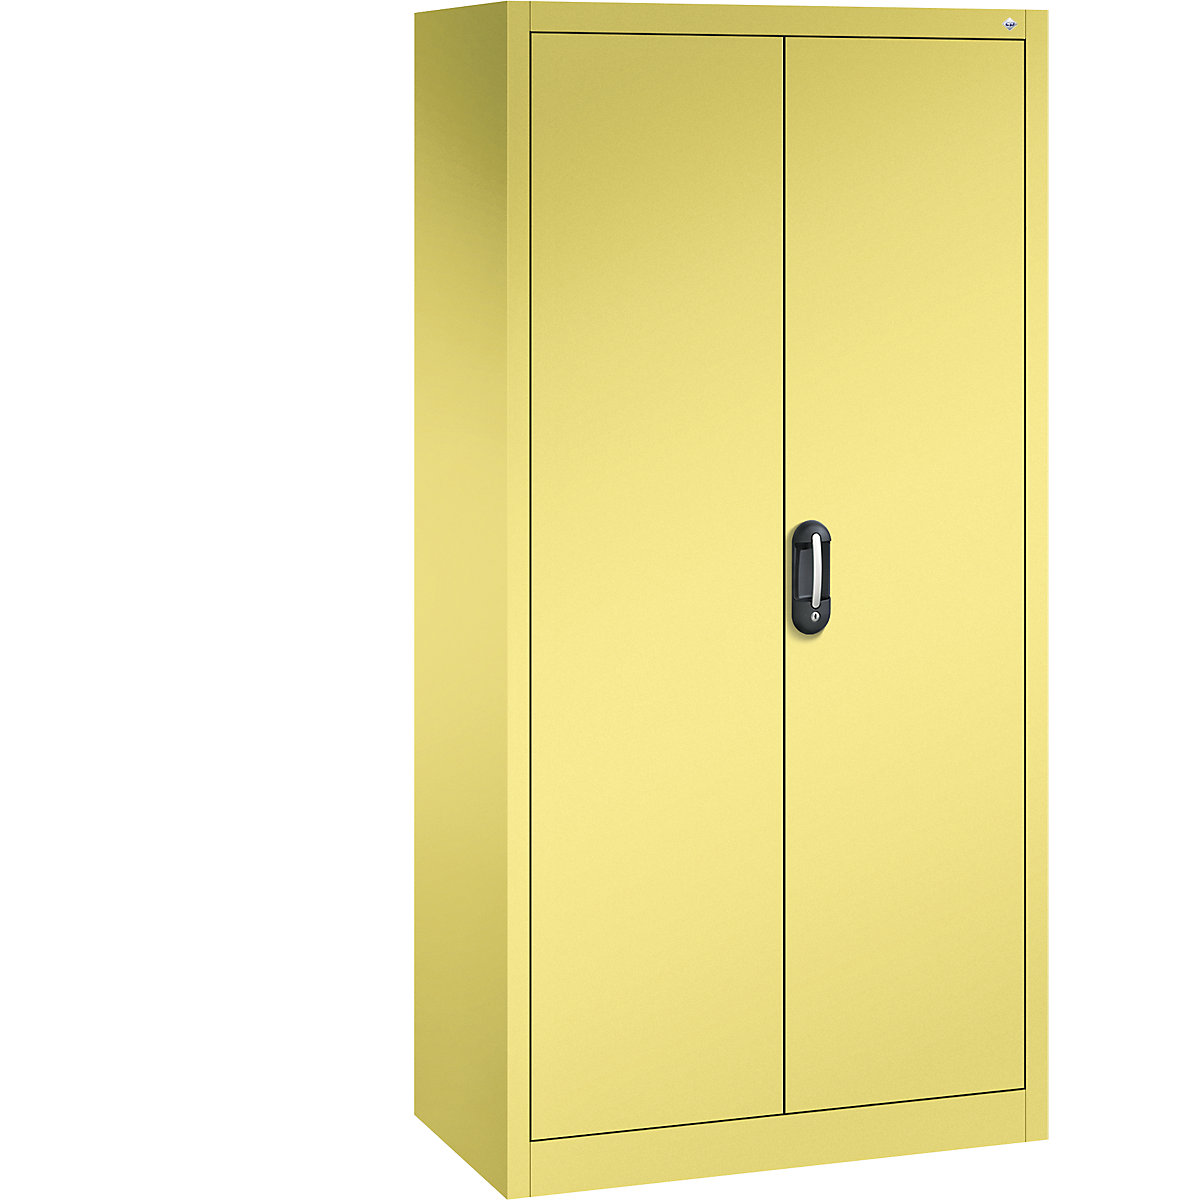 ACURADO universal cupboard – C+P, WxD 930 x 500 mm, sulphur yellow / sulphur yellow-18